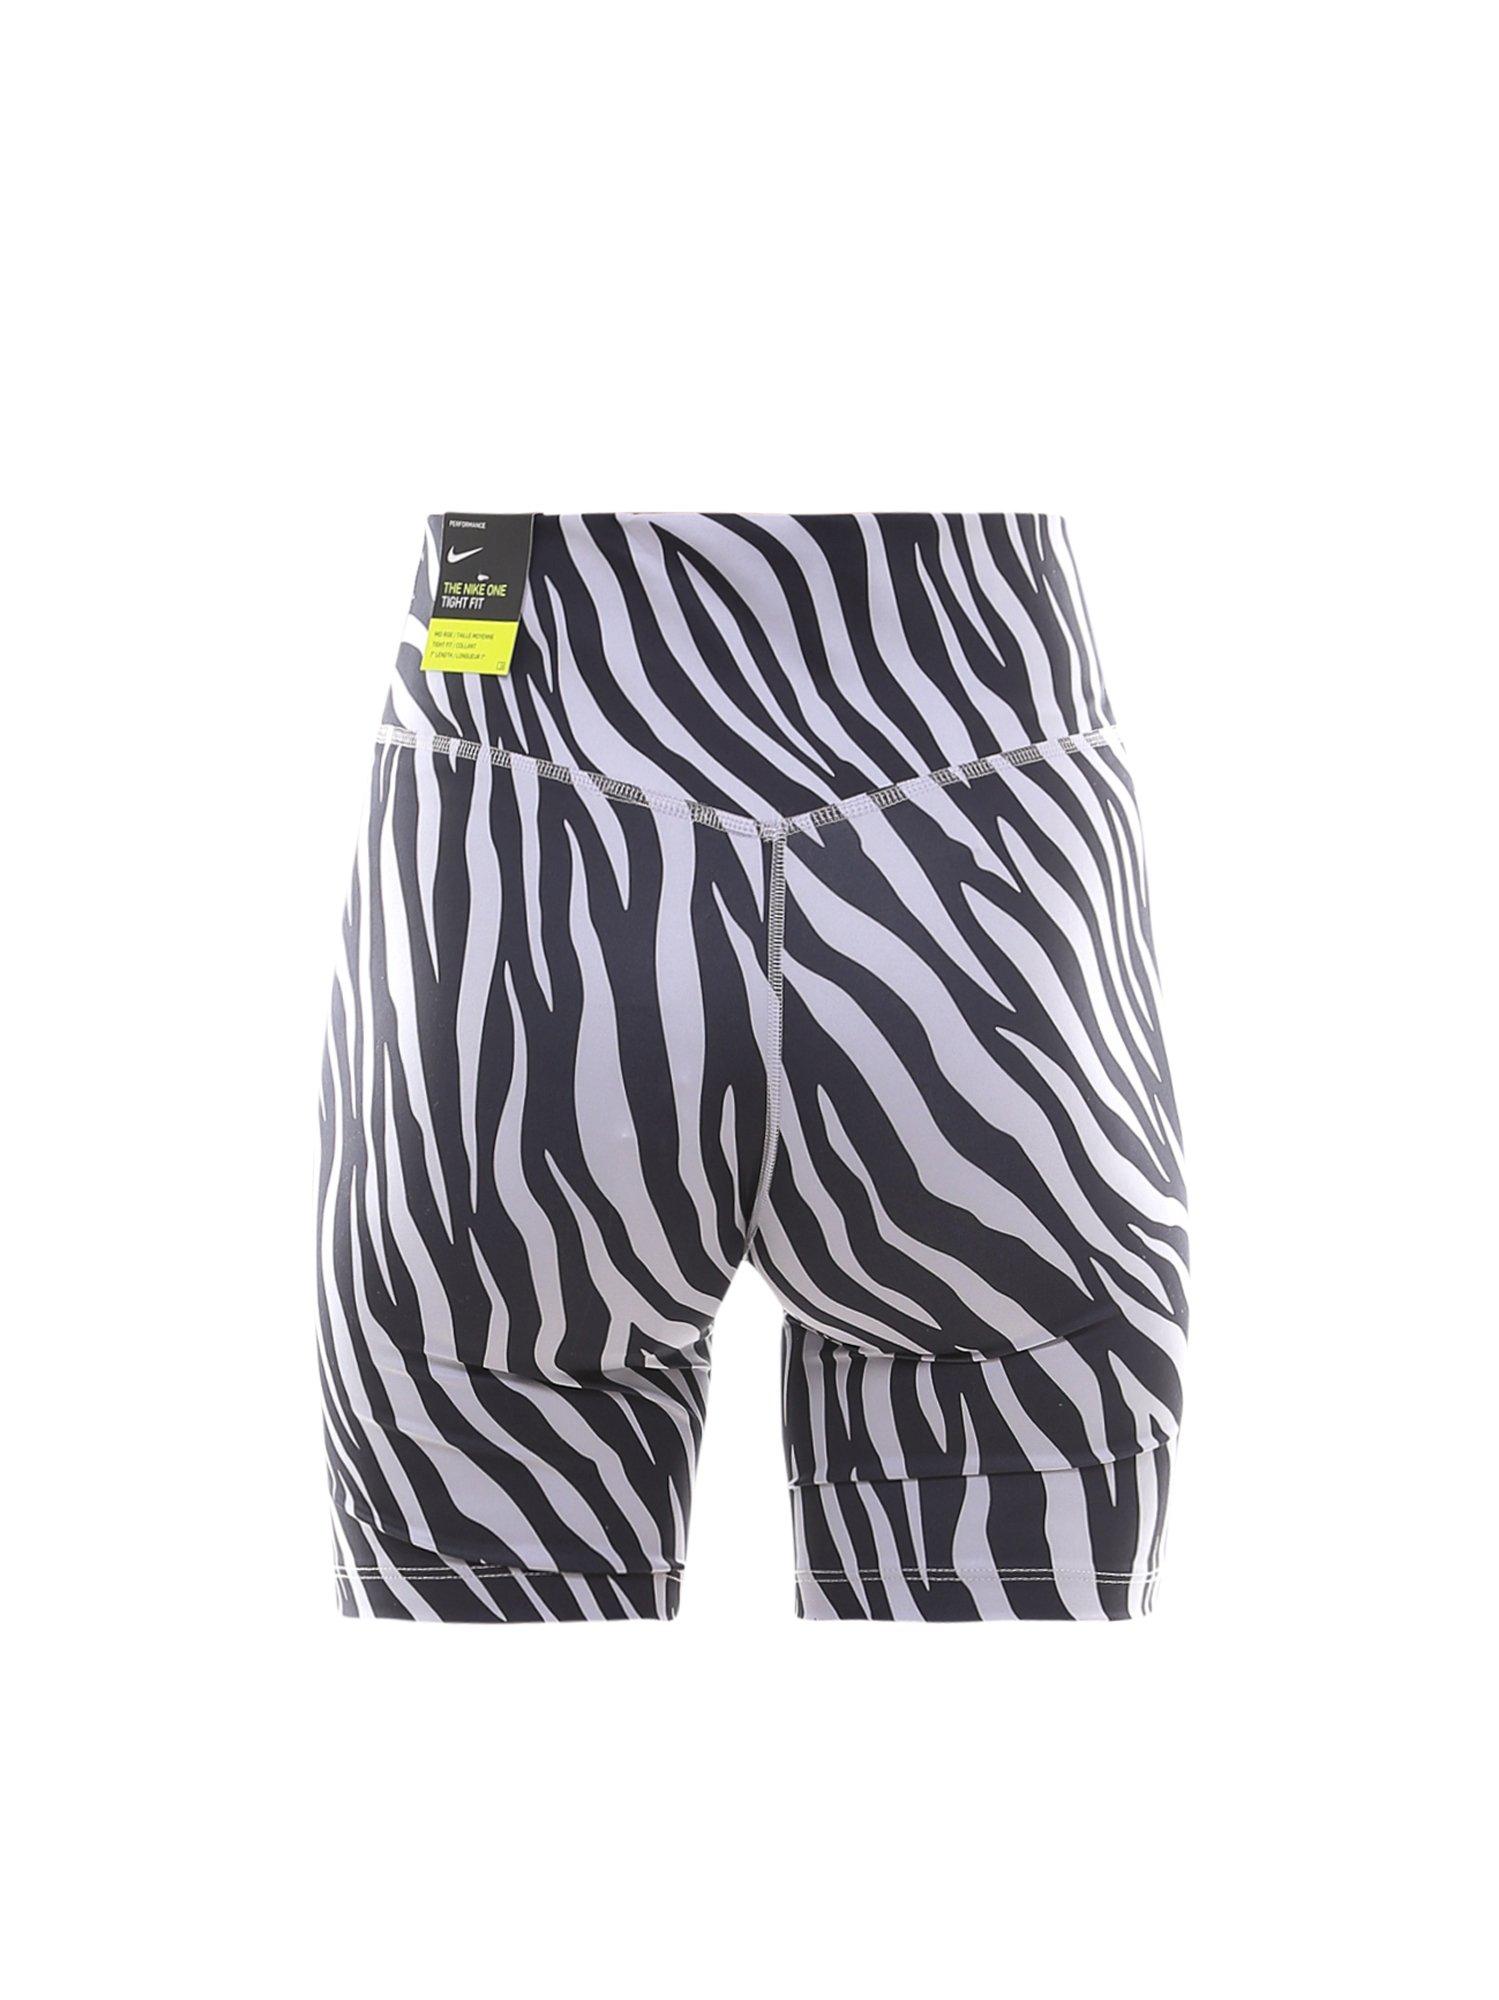 Nike Synthetic Zebra Print Cycling Shorts | Lyst